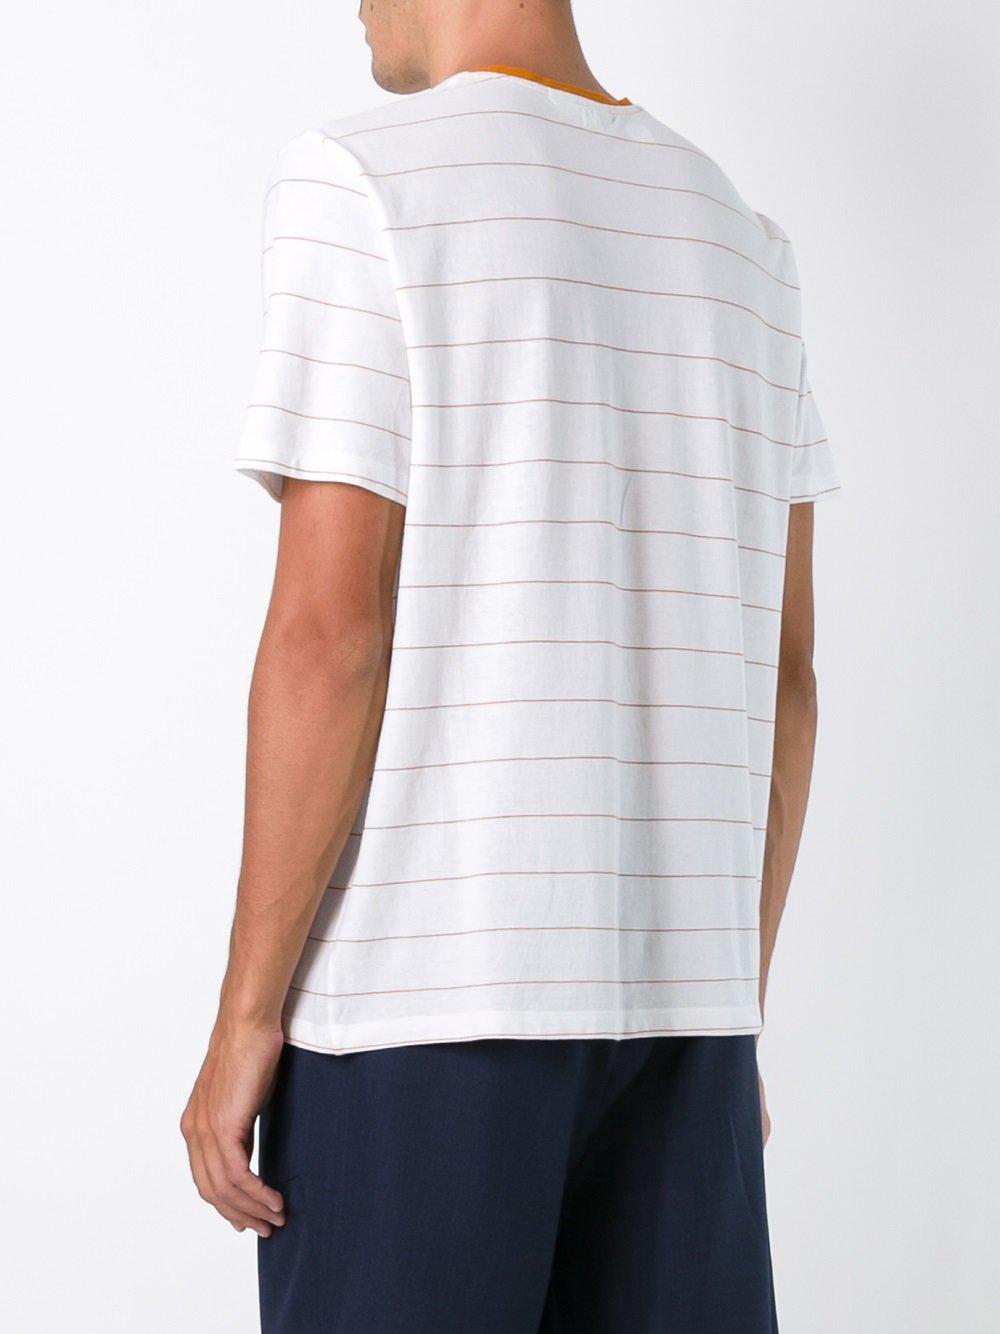 AMI Thin Stripe T-shirt in White for Men - Lyst